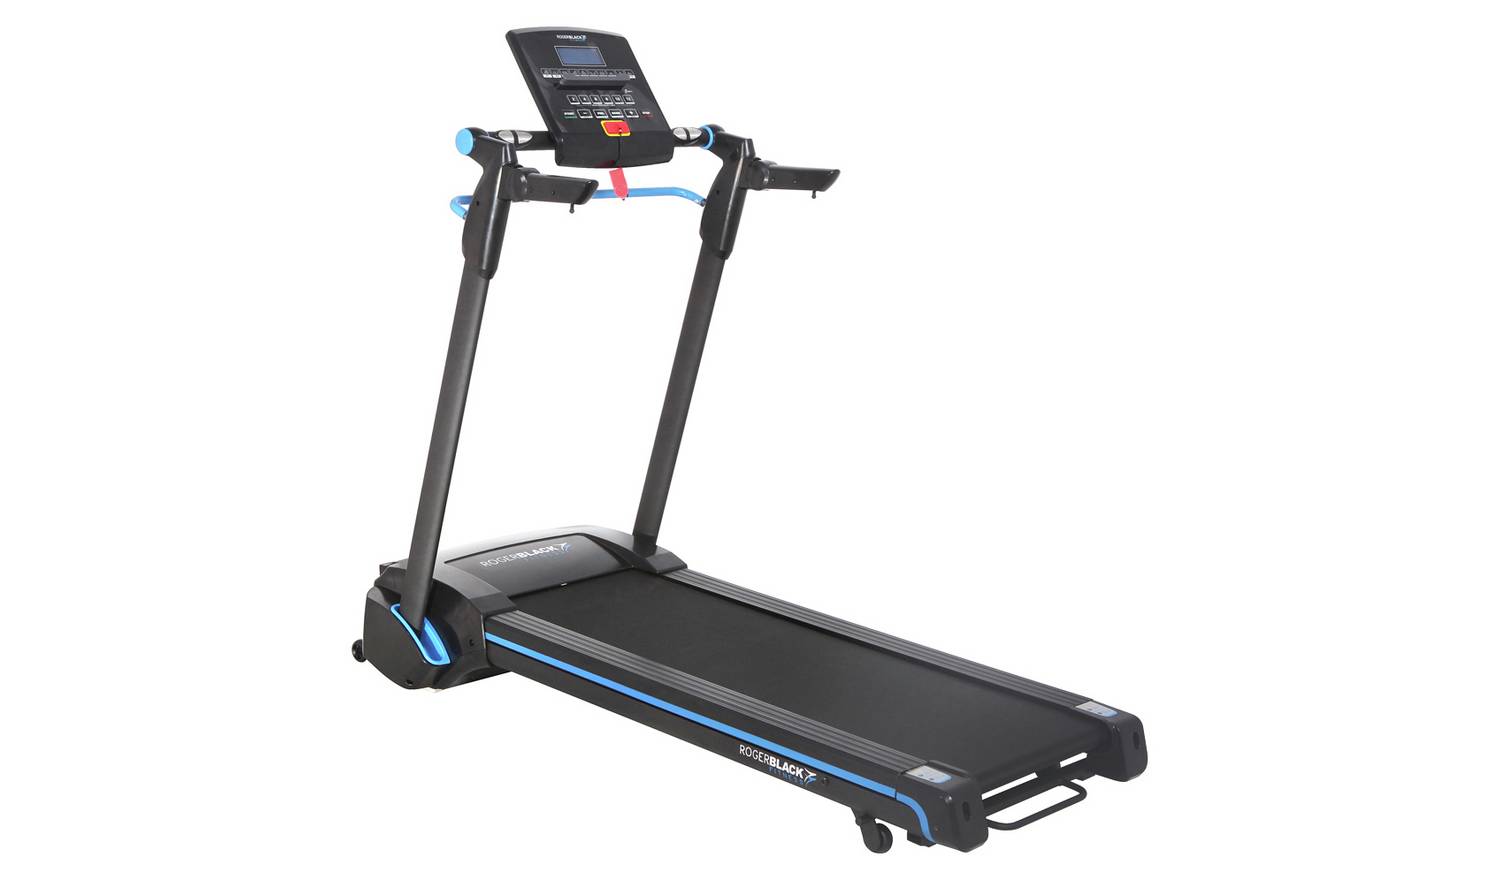 reebok one gt40s treadmill safety key